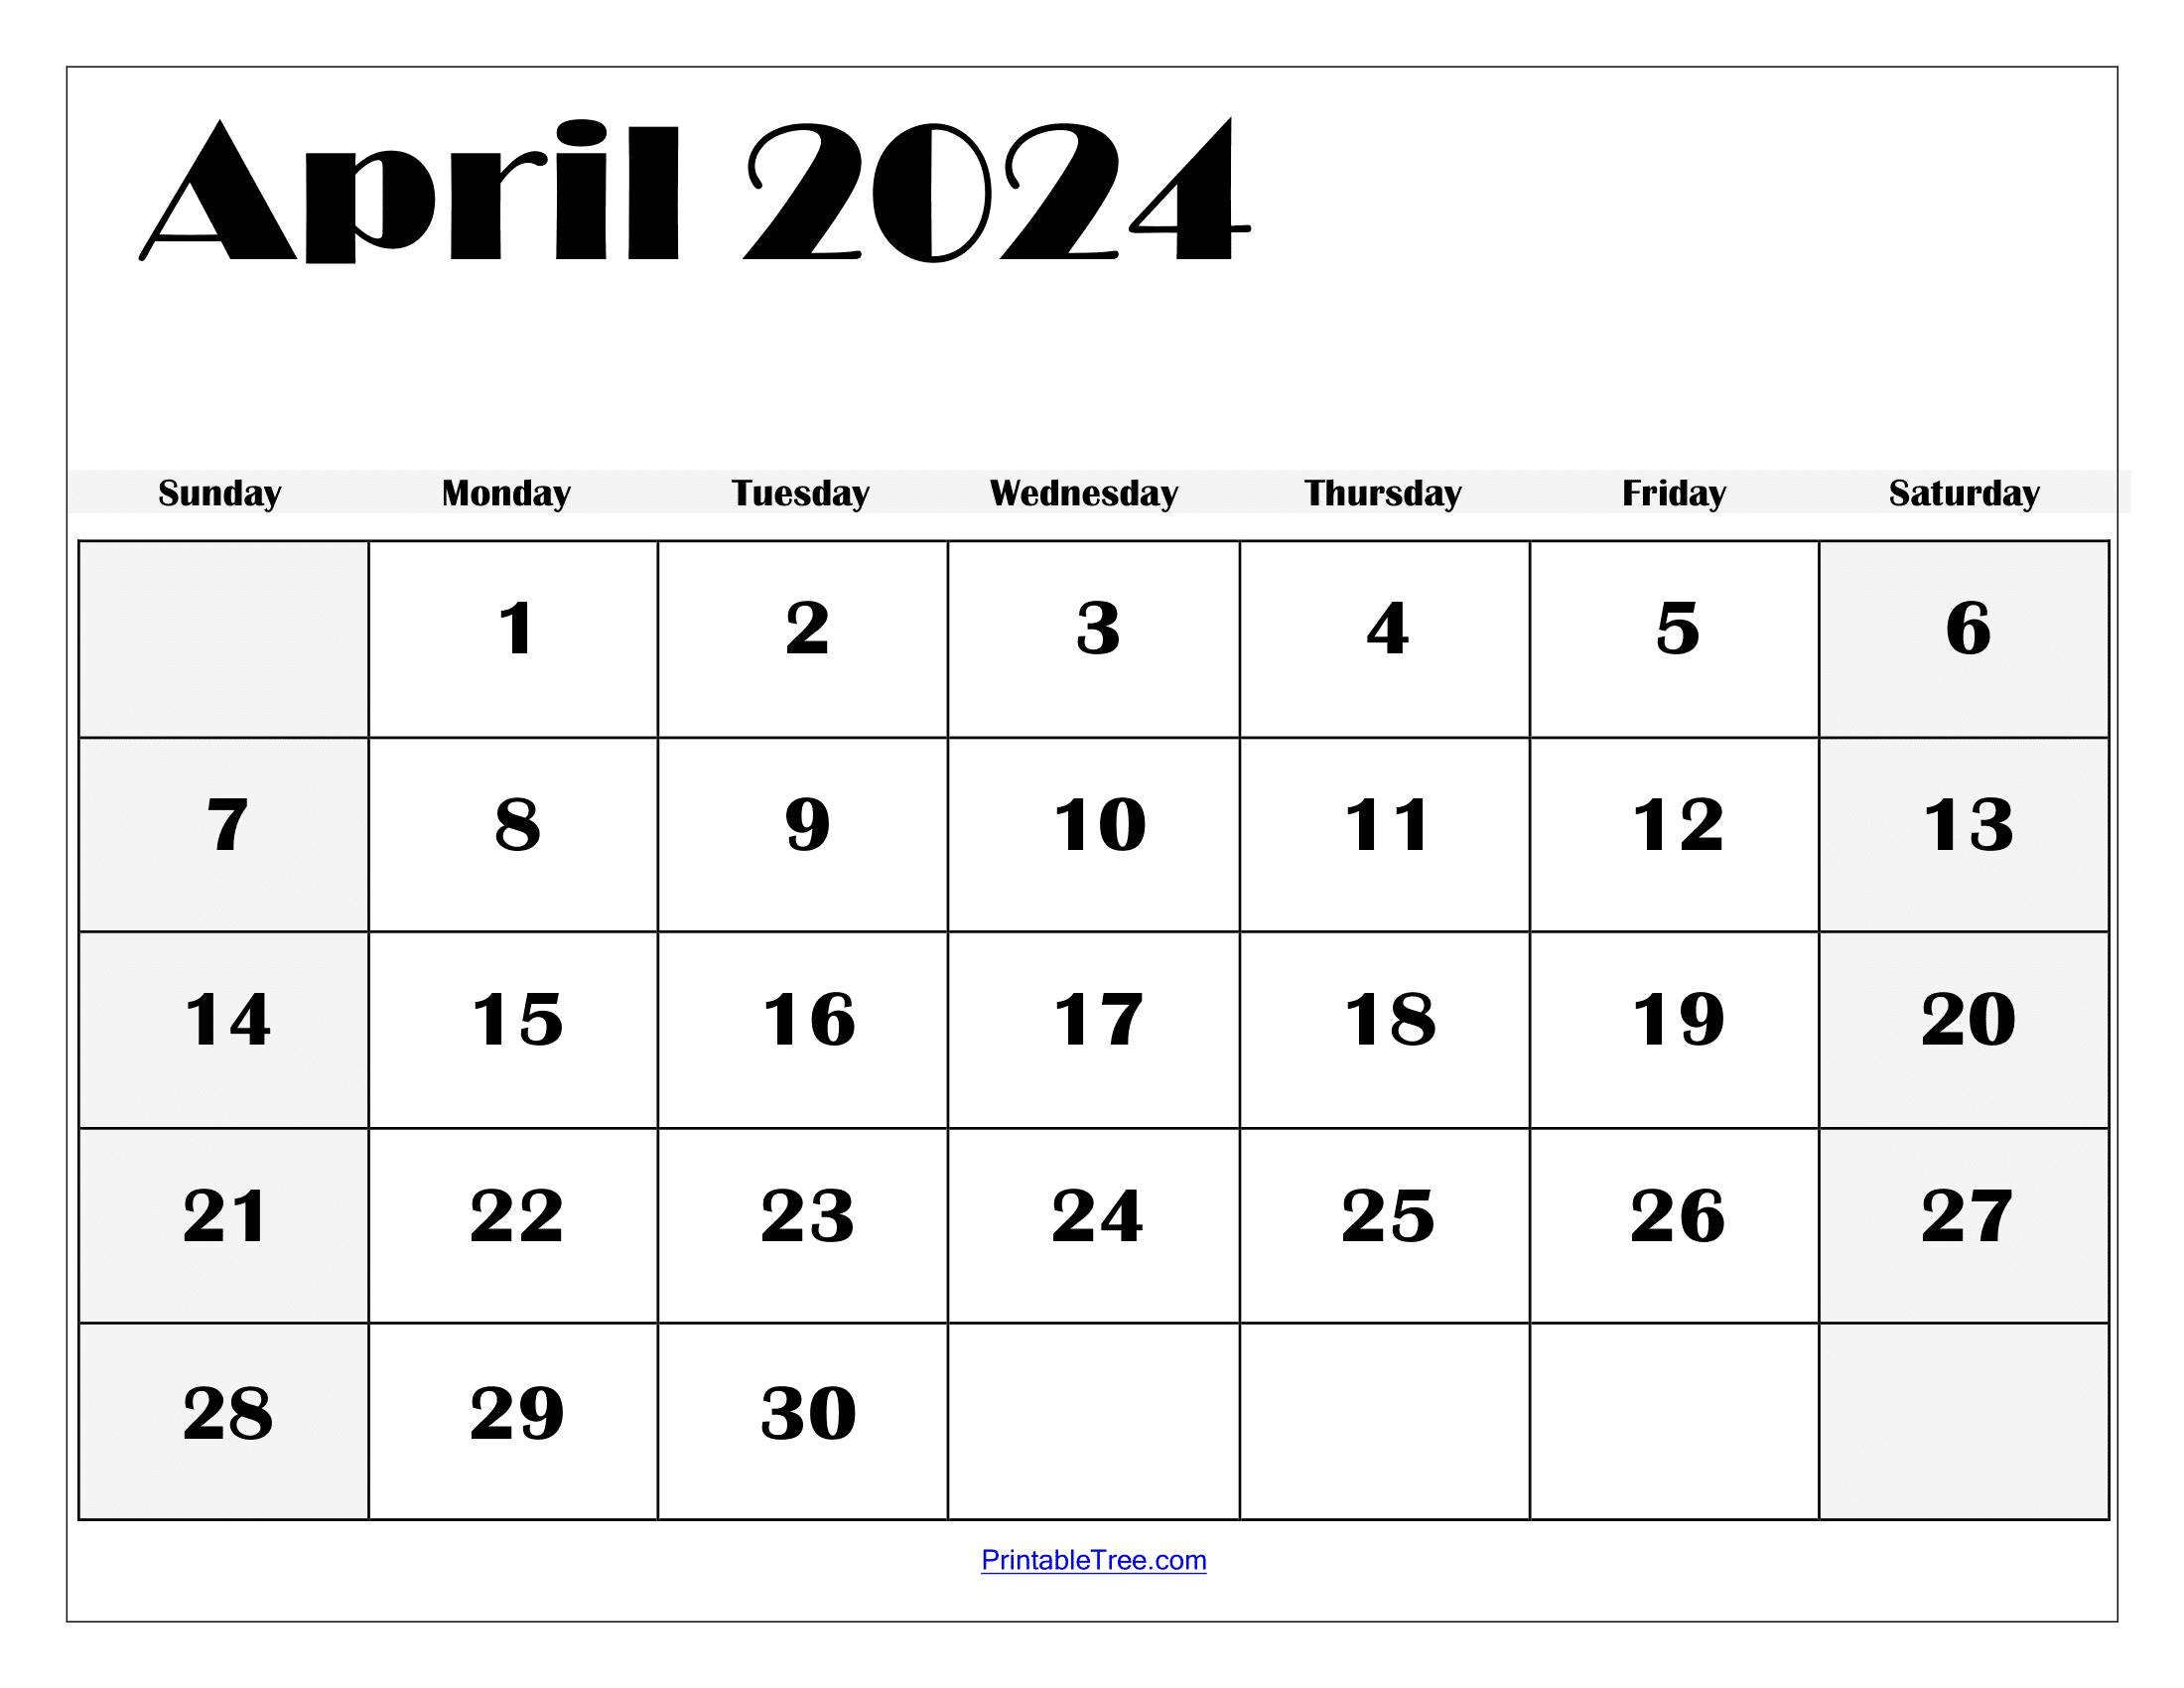 Blank April 2024 Calendar Printable Pdf Template With Holidays throughout Free Printable April 2024 Calendar Template